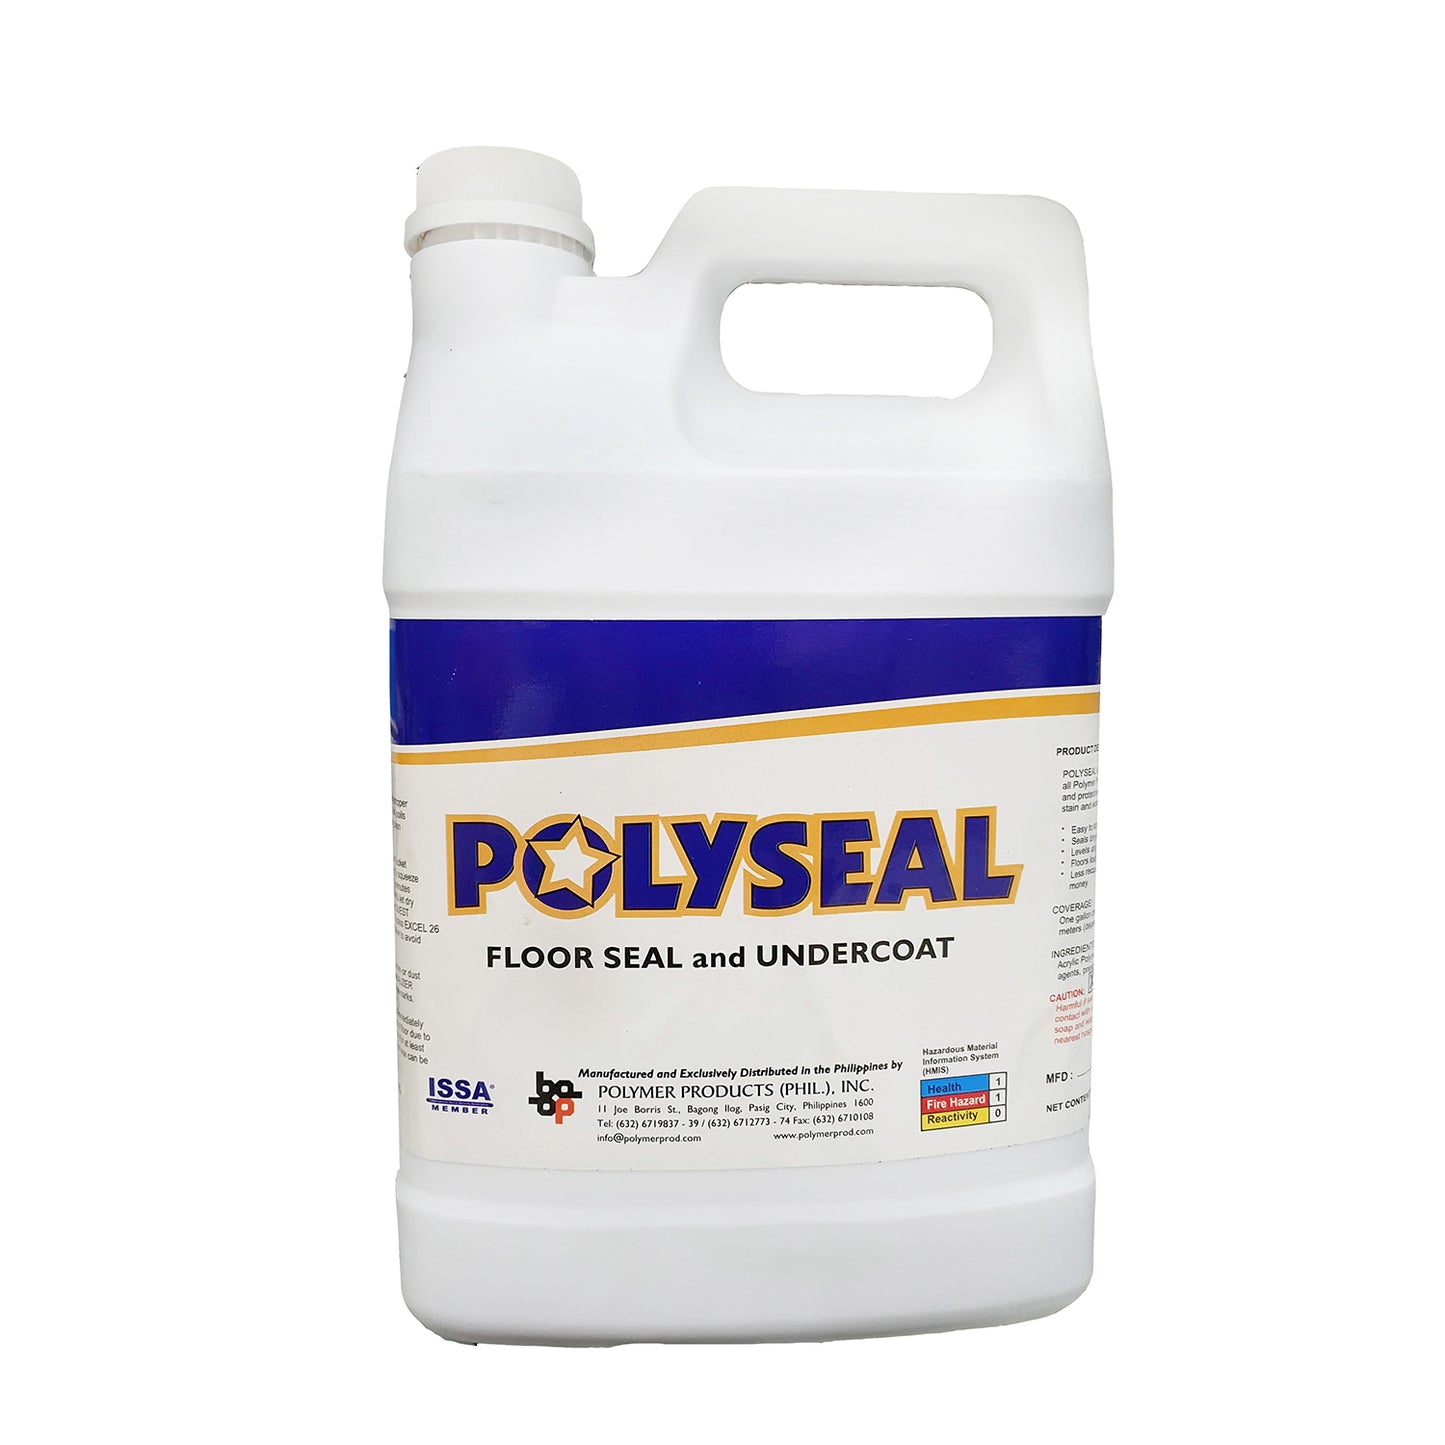 Polyseal Floor Seal and Undercoat